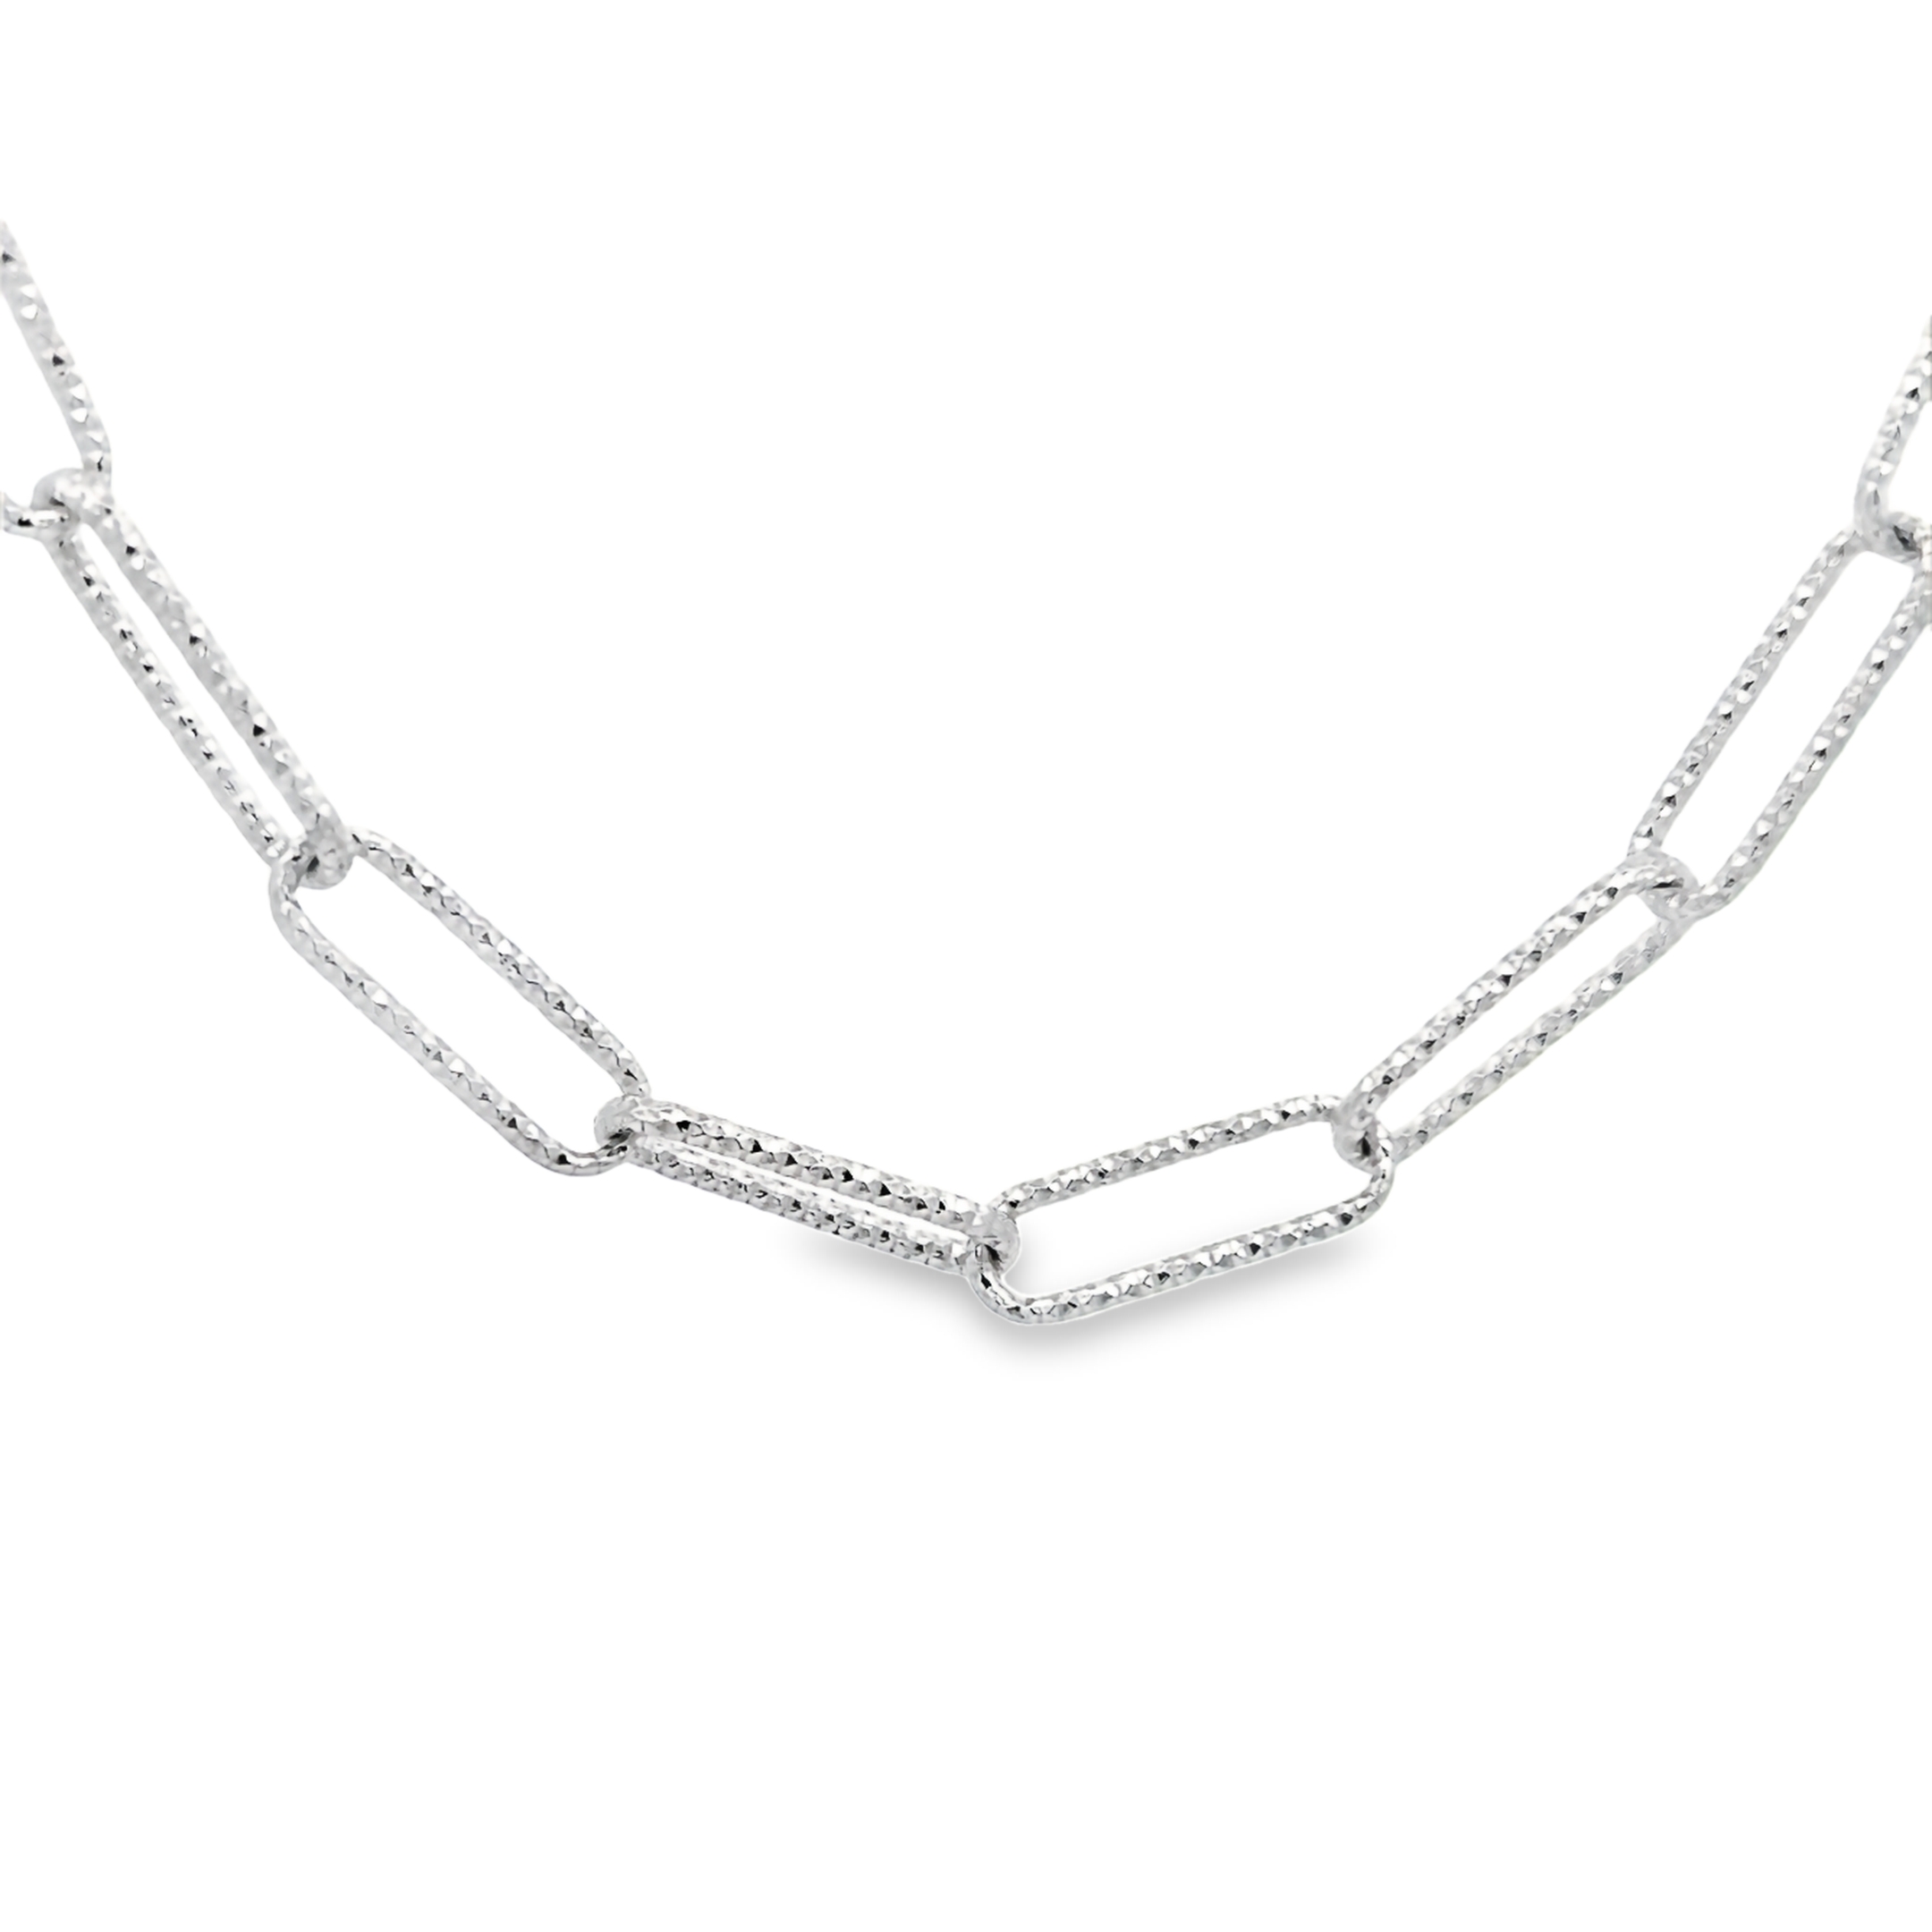 Sterling Silver Fancy Link Necklace